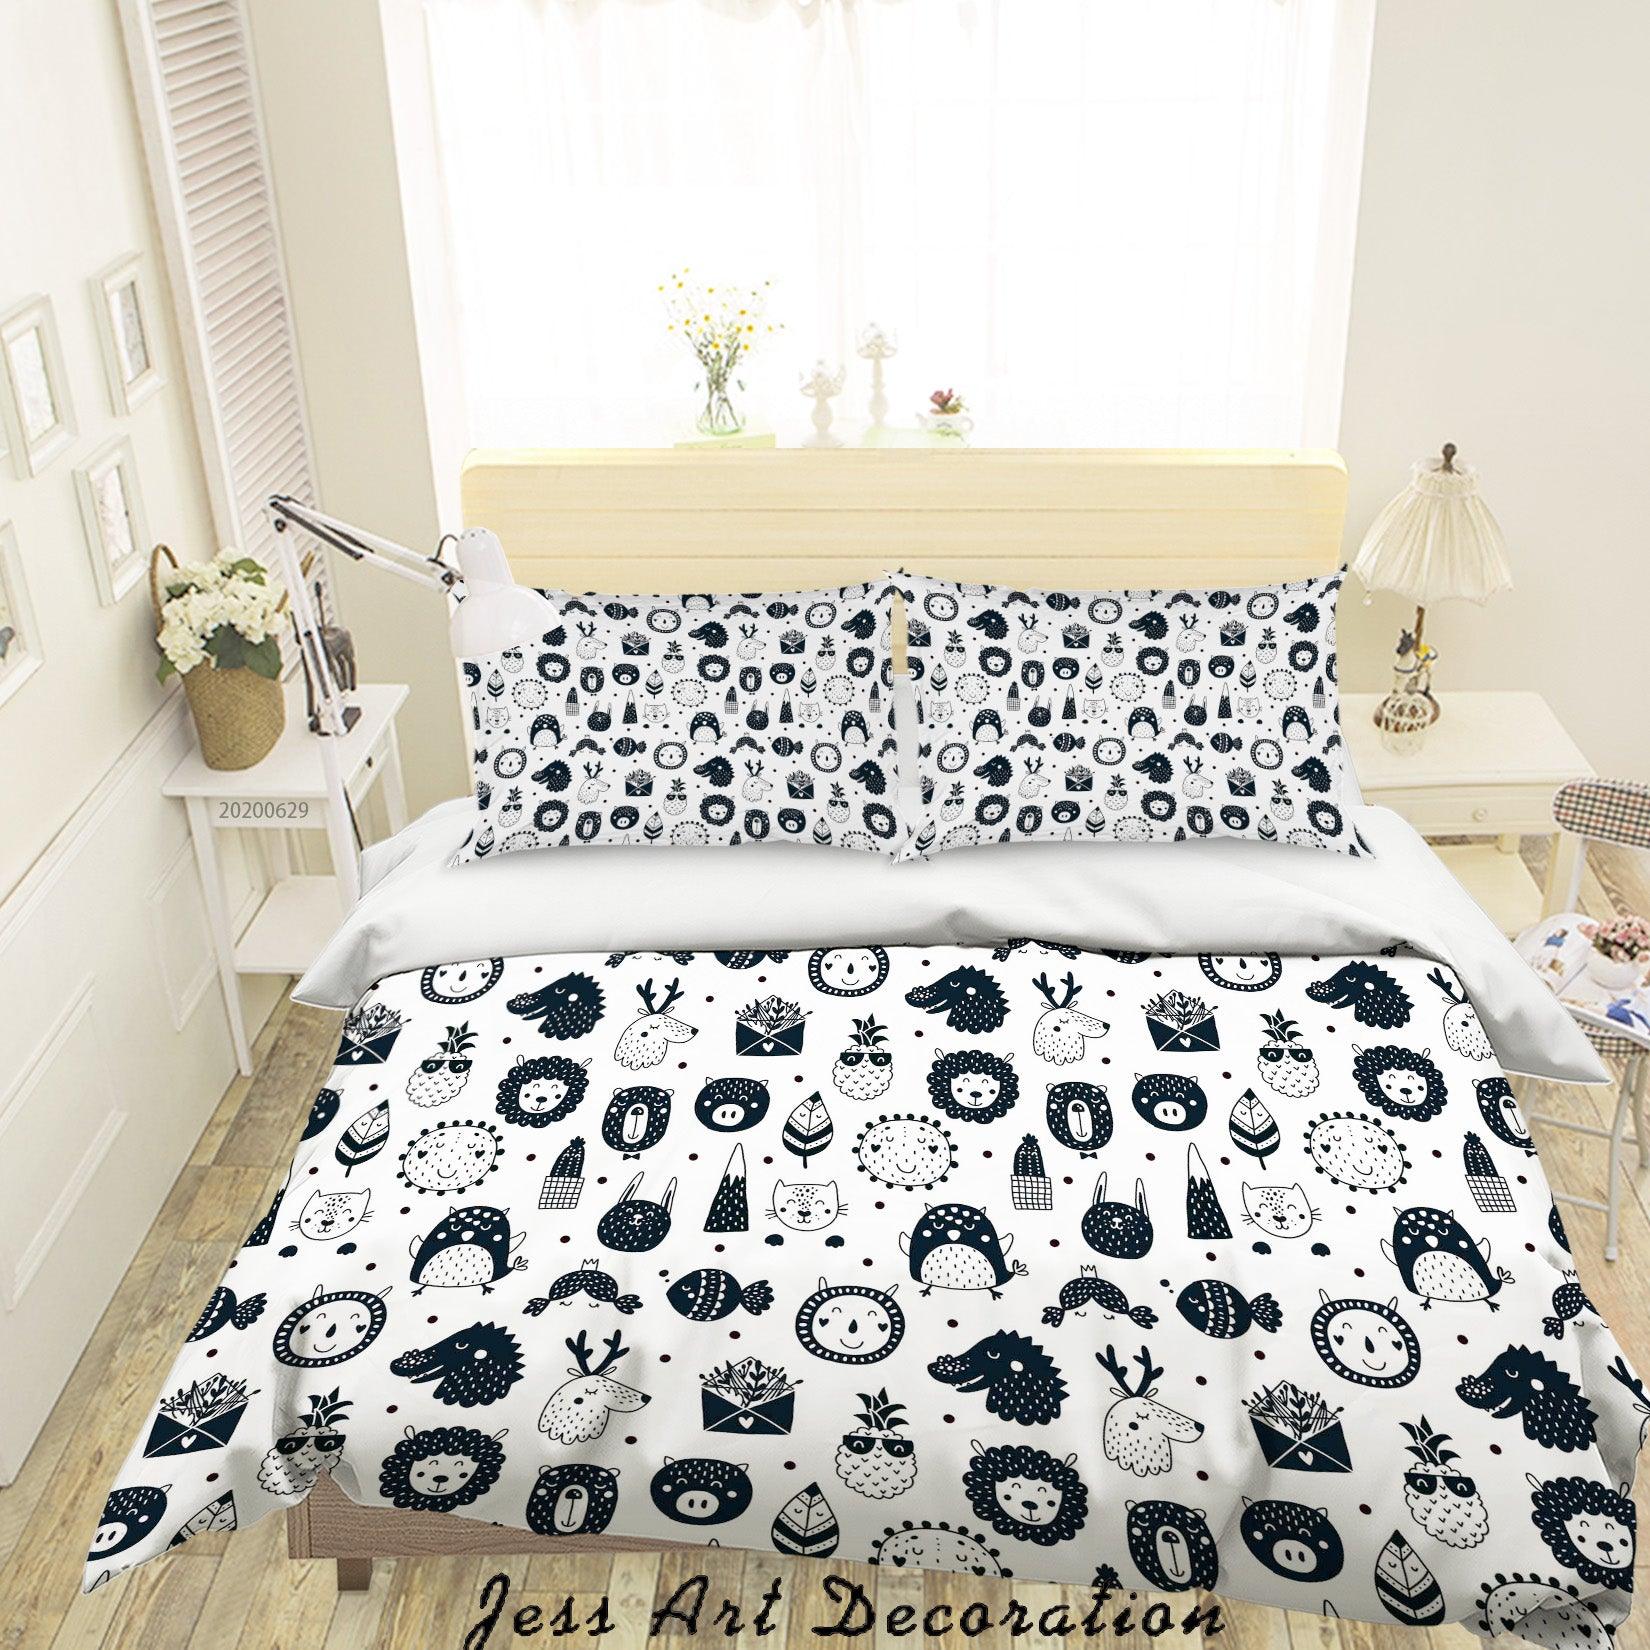 3D White Black Cartoon Animal Fruit Quilt Cover Set Bedding Set Duvet Cover Pillowcases SF92- Jess Art Decoration